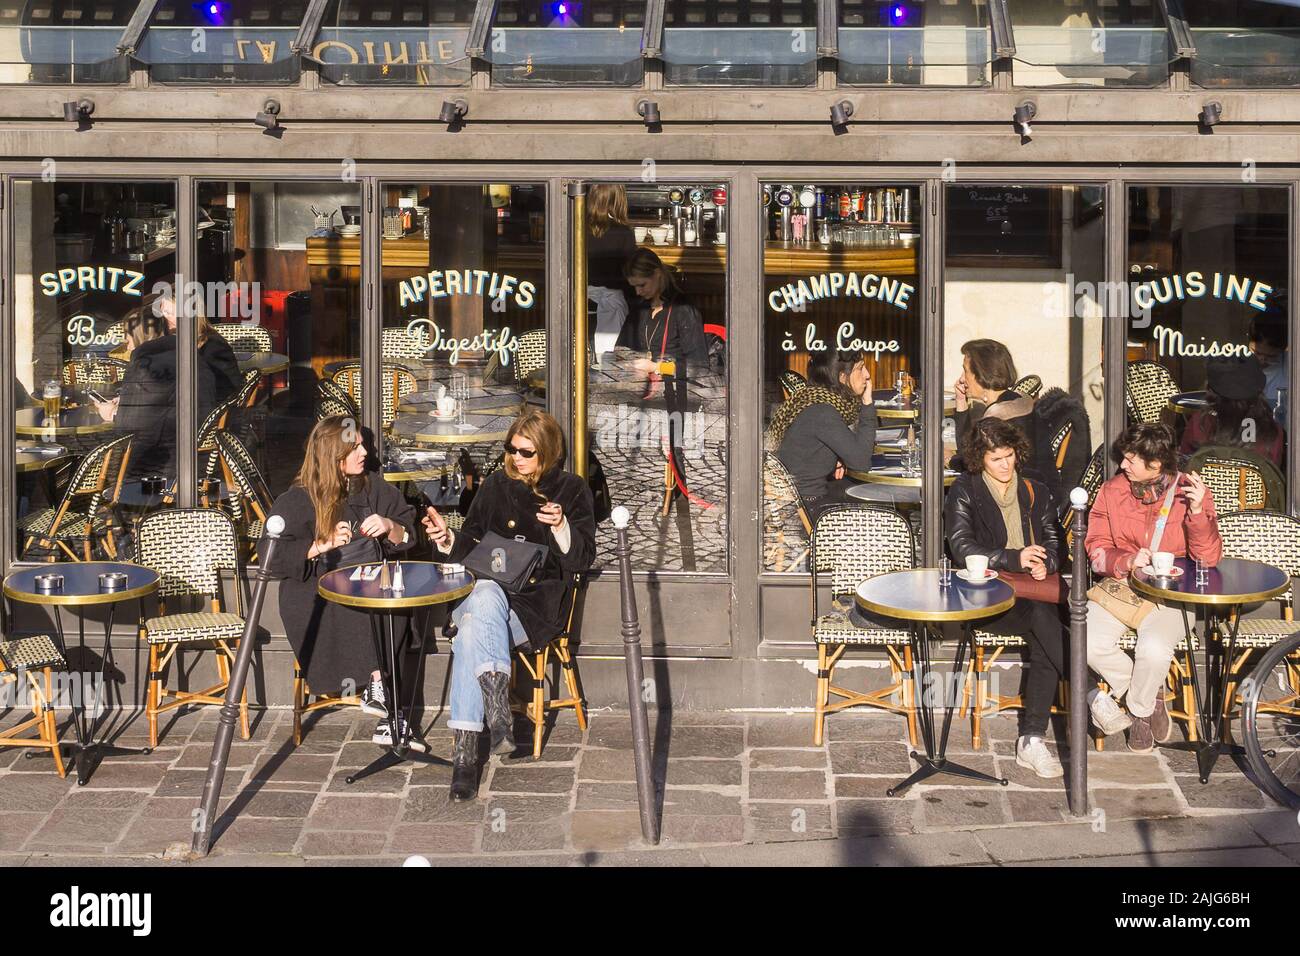 Paris La Pointe - People enjoying sunshine at La Pointe cafe terrace on Rue Montorgueil in the 1st arrondissement of Paris, France, Europe. Stock Photo